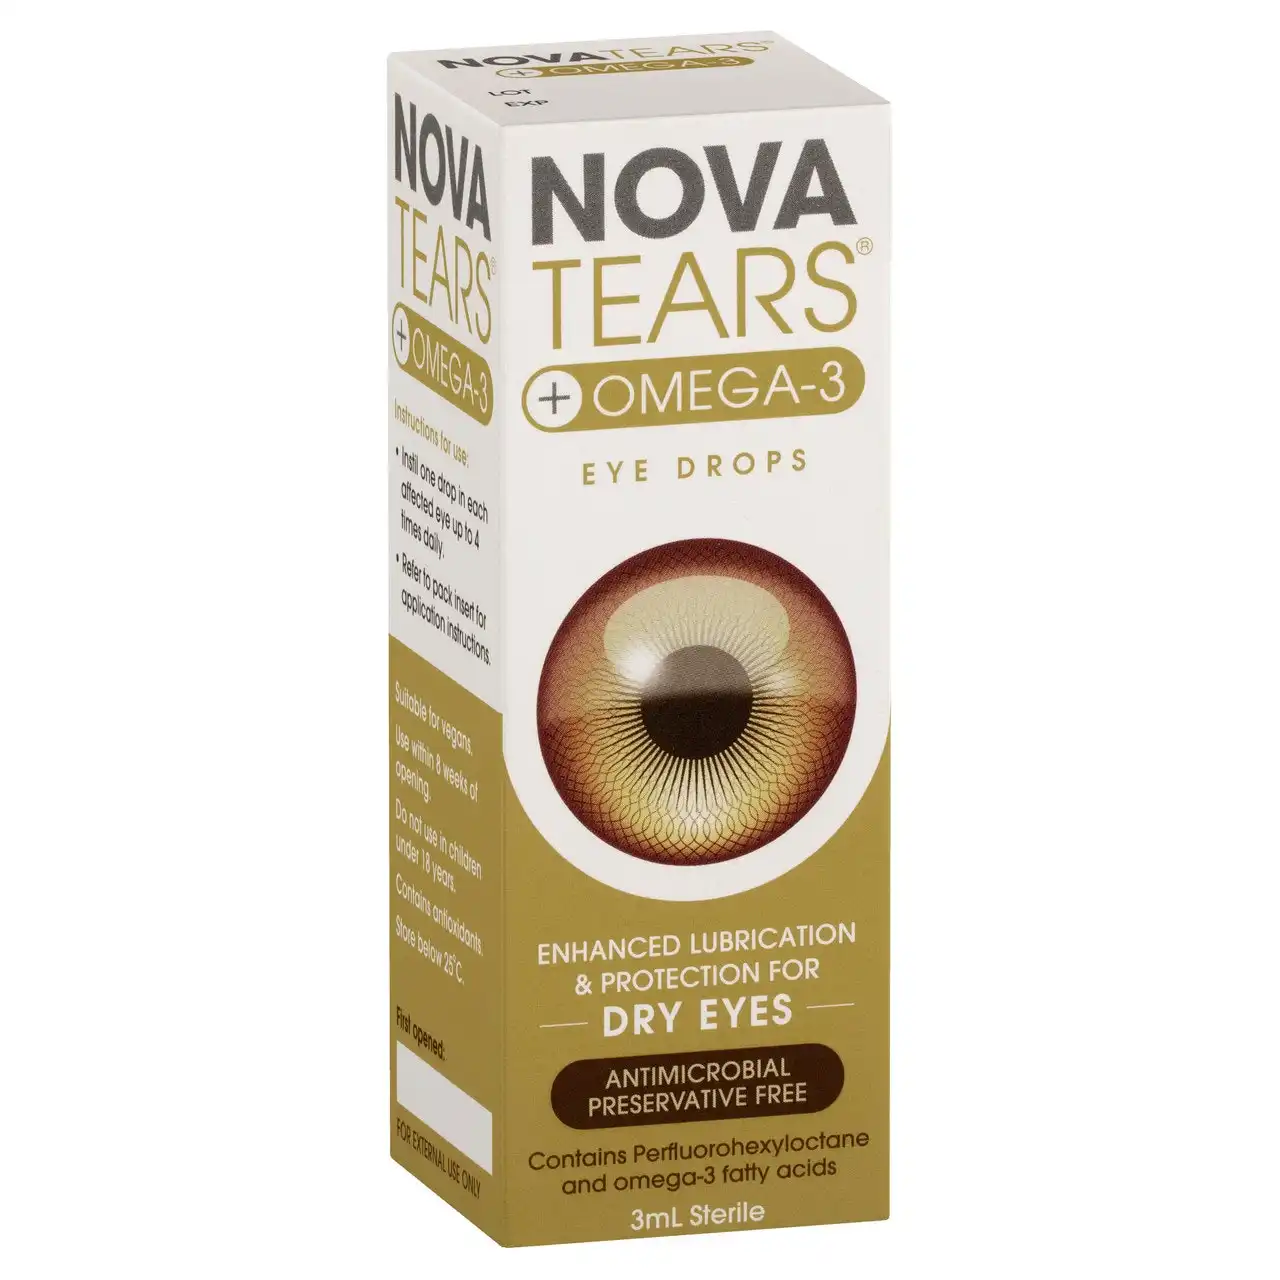 NovaTears(R) + Omega-3 Eye Drops 3mL